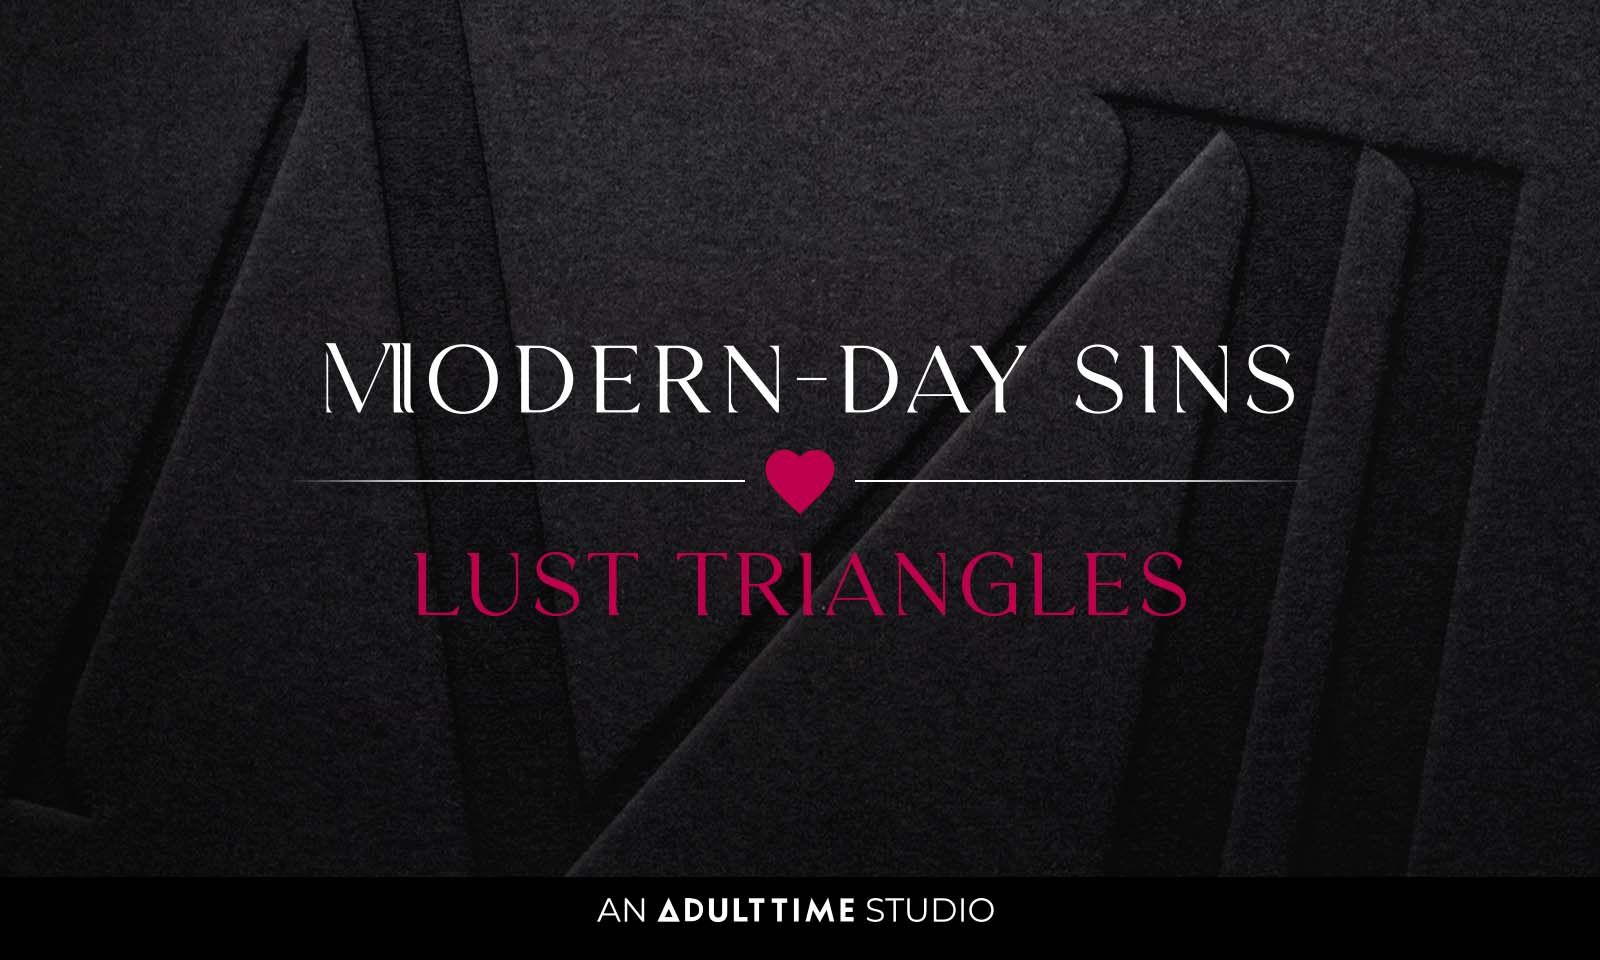 Modern-Day Sins Series 'Lust Triangles' Gets Previewed This Week